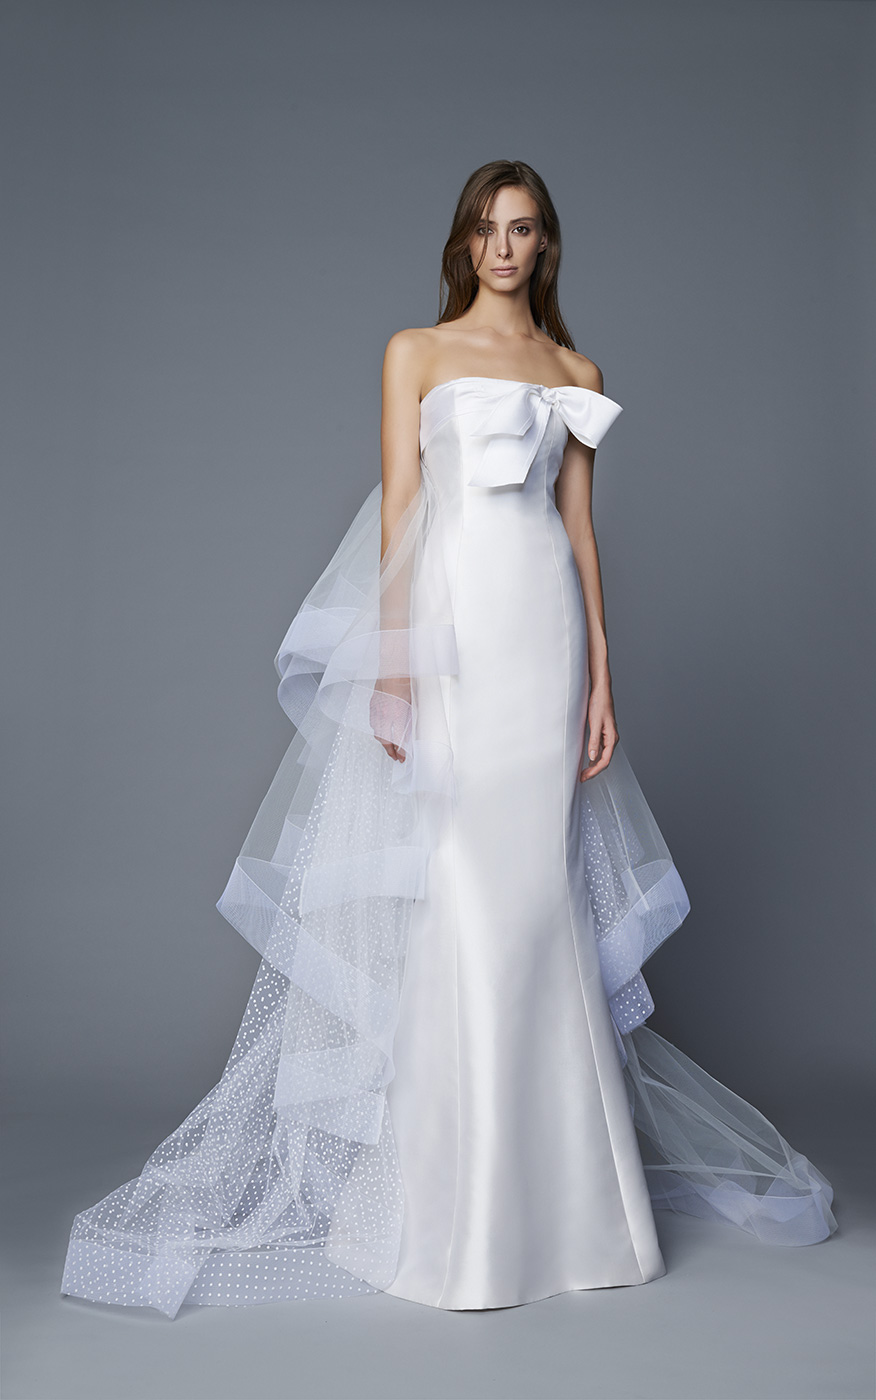 @projectfairytale: Antonio Riva Iconic Bridal Collection